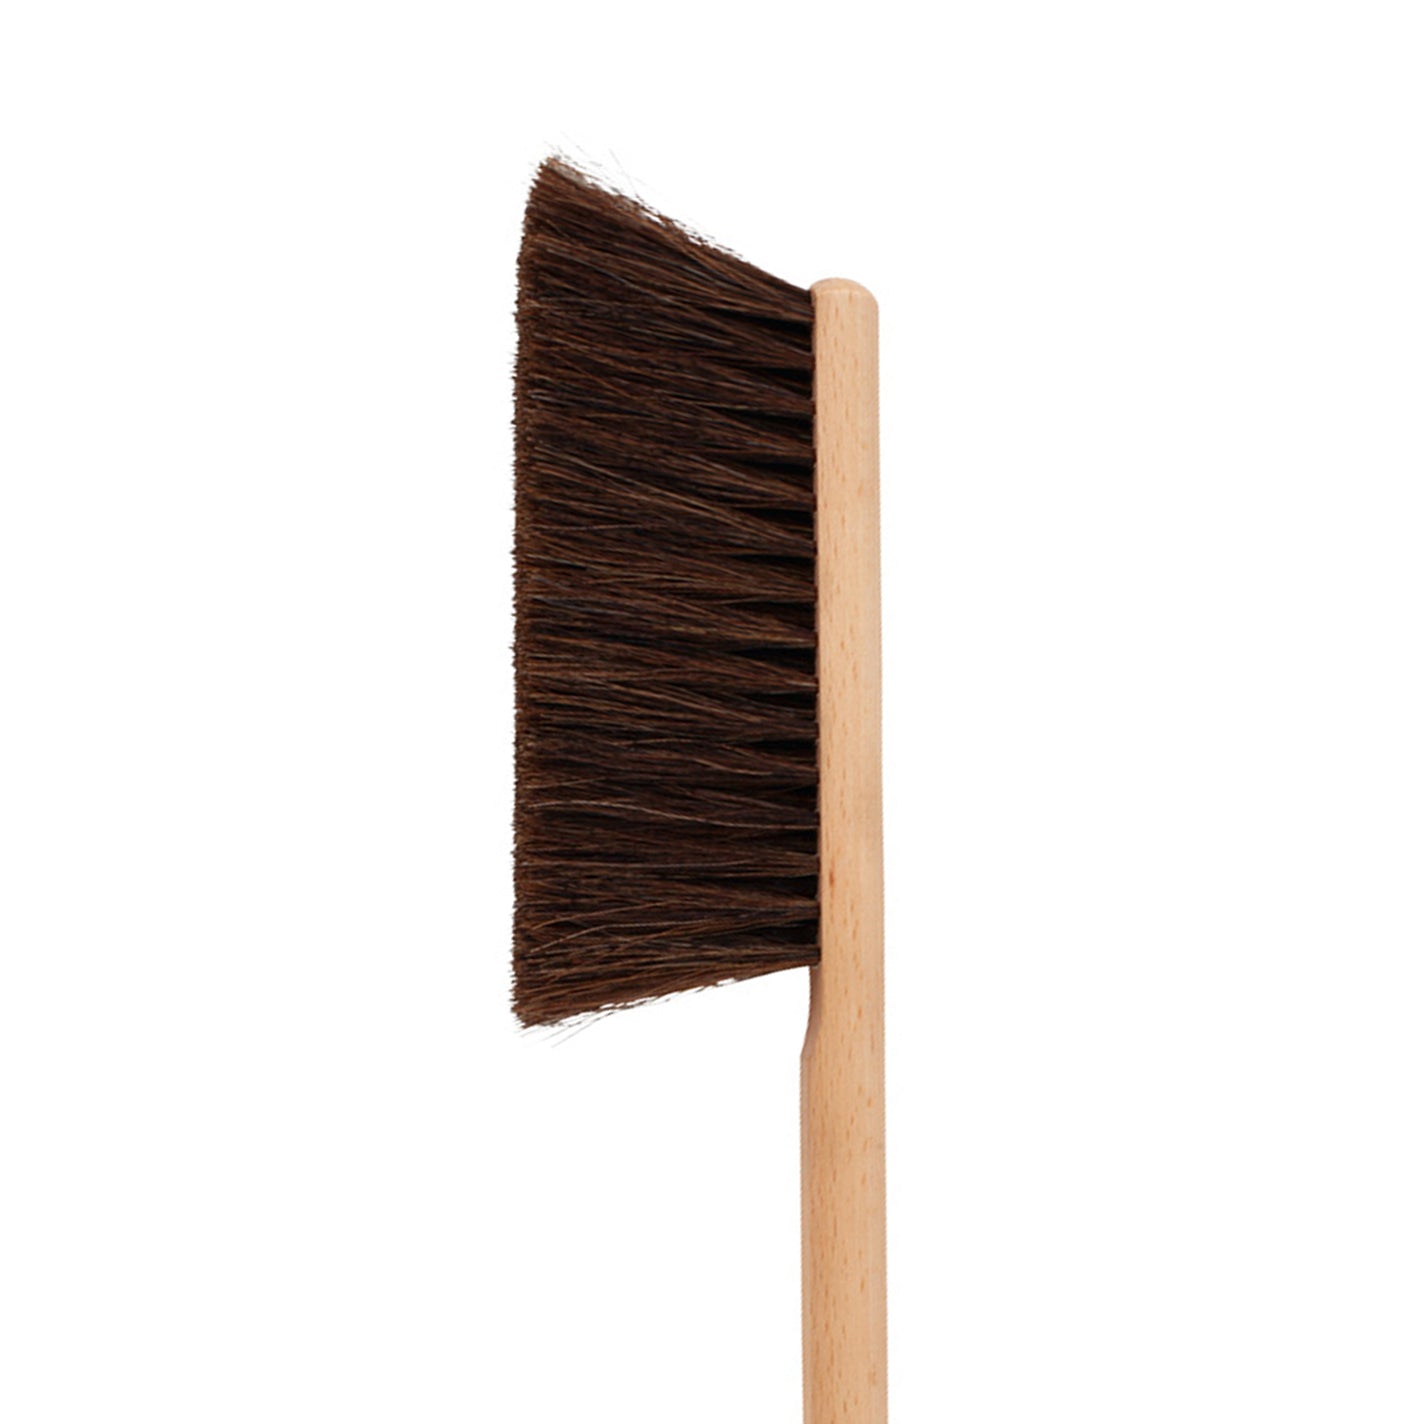 Redecker Dust Pan Brush - Narrow Style